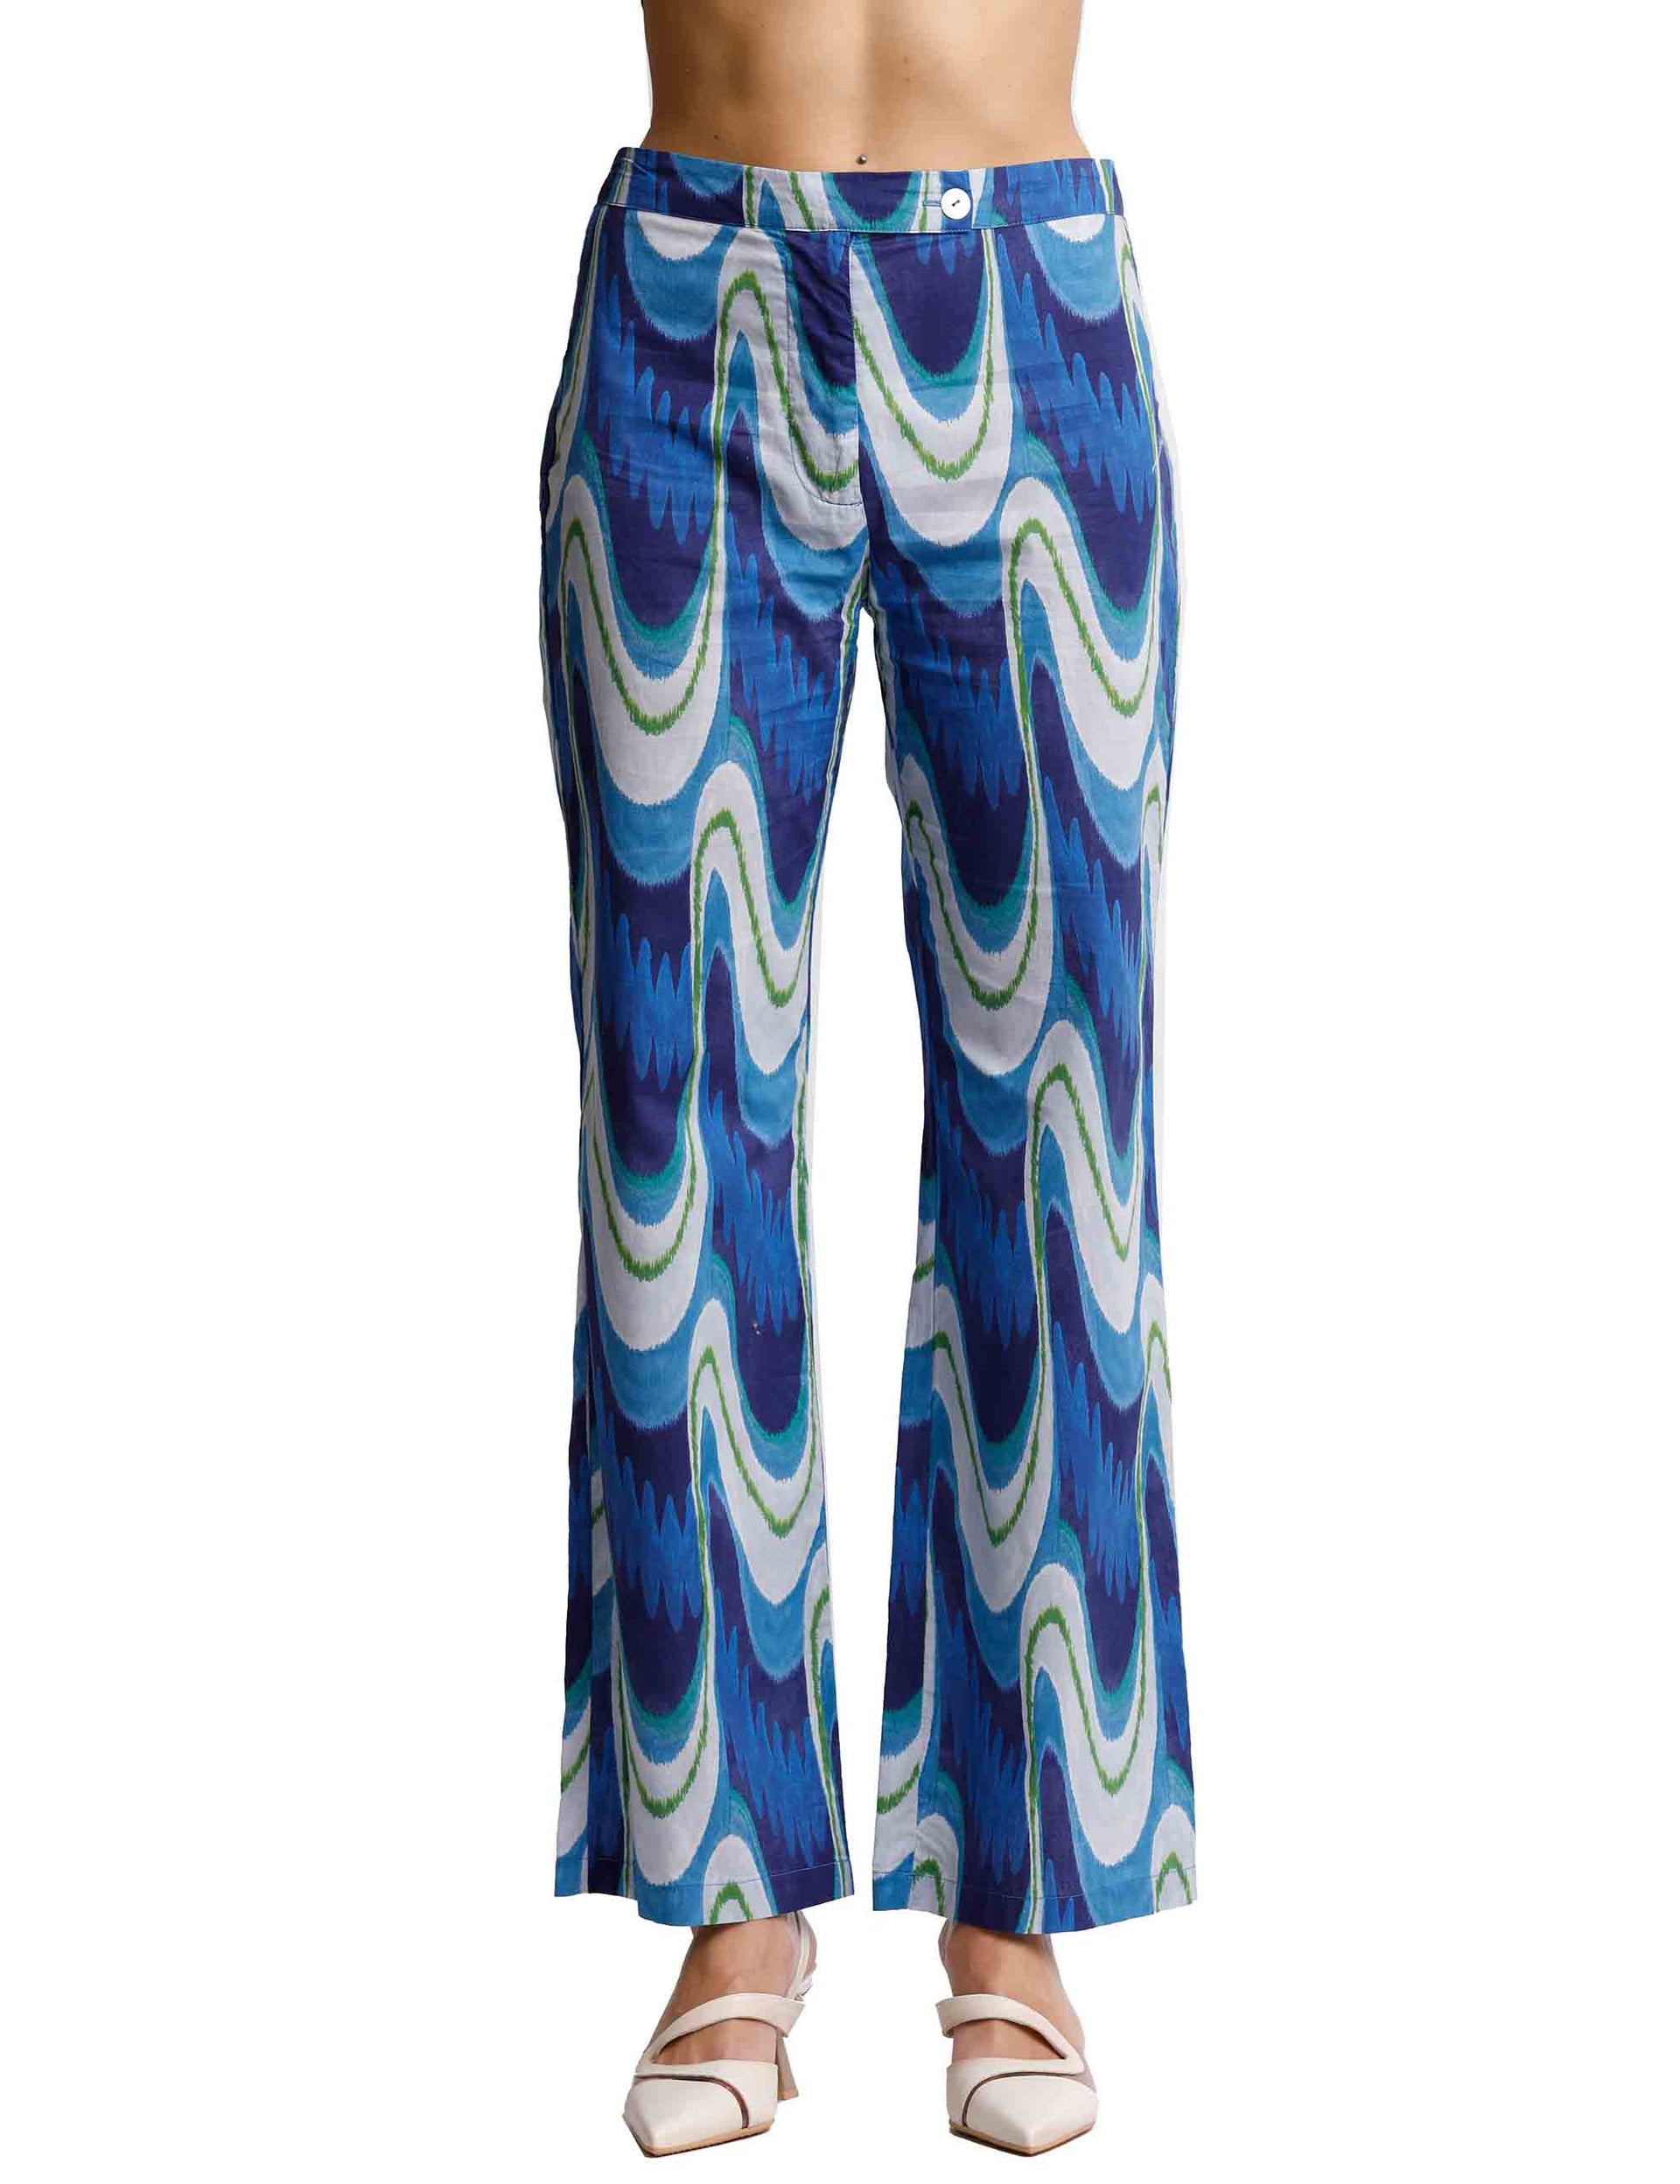 Pantaloni donna Ikat Wave Muslin in cotone blu a fantasia